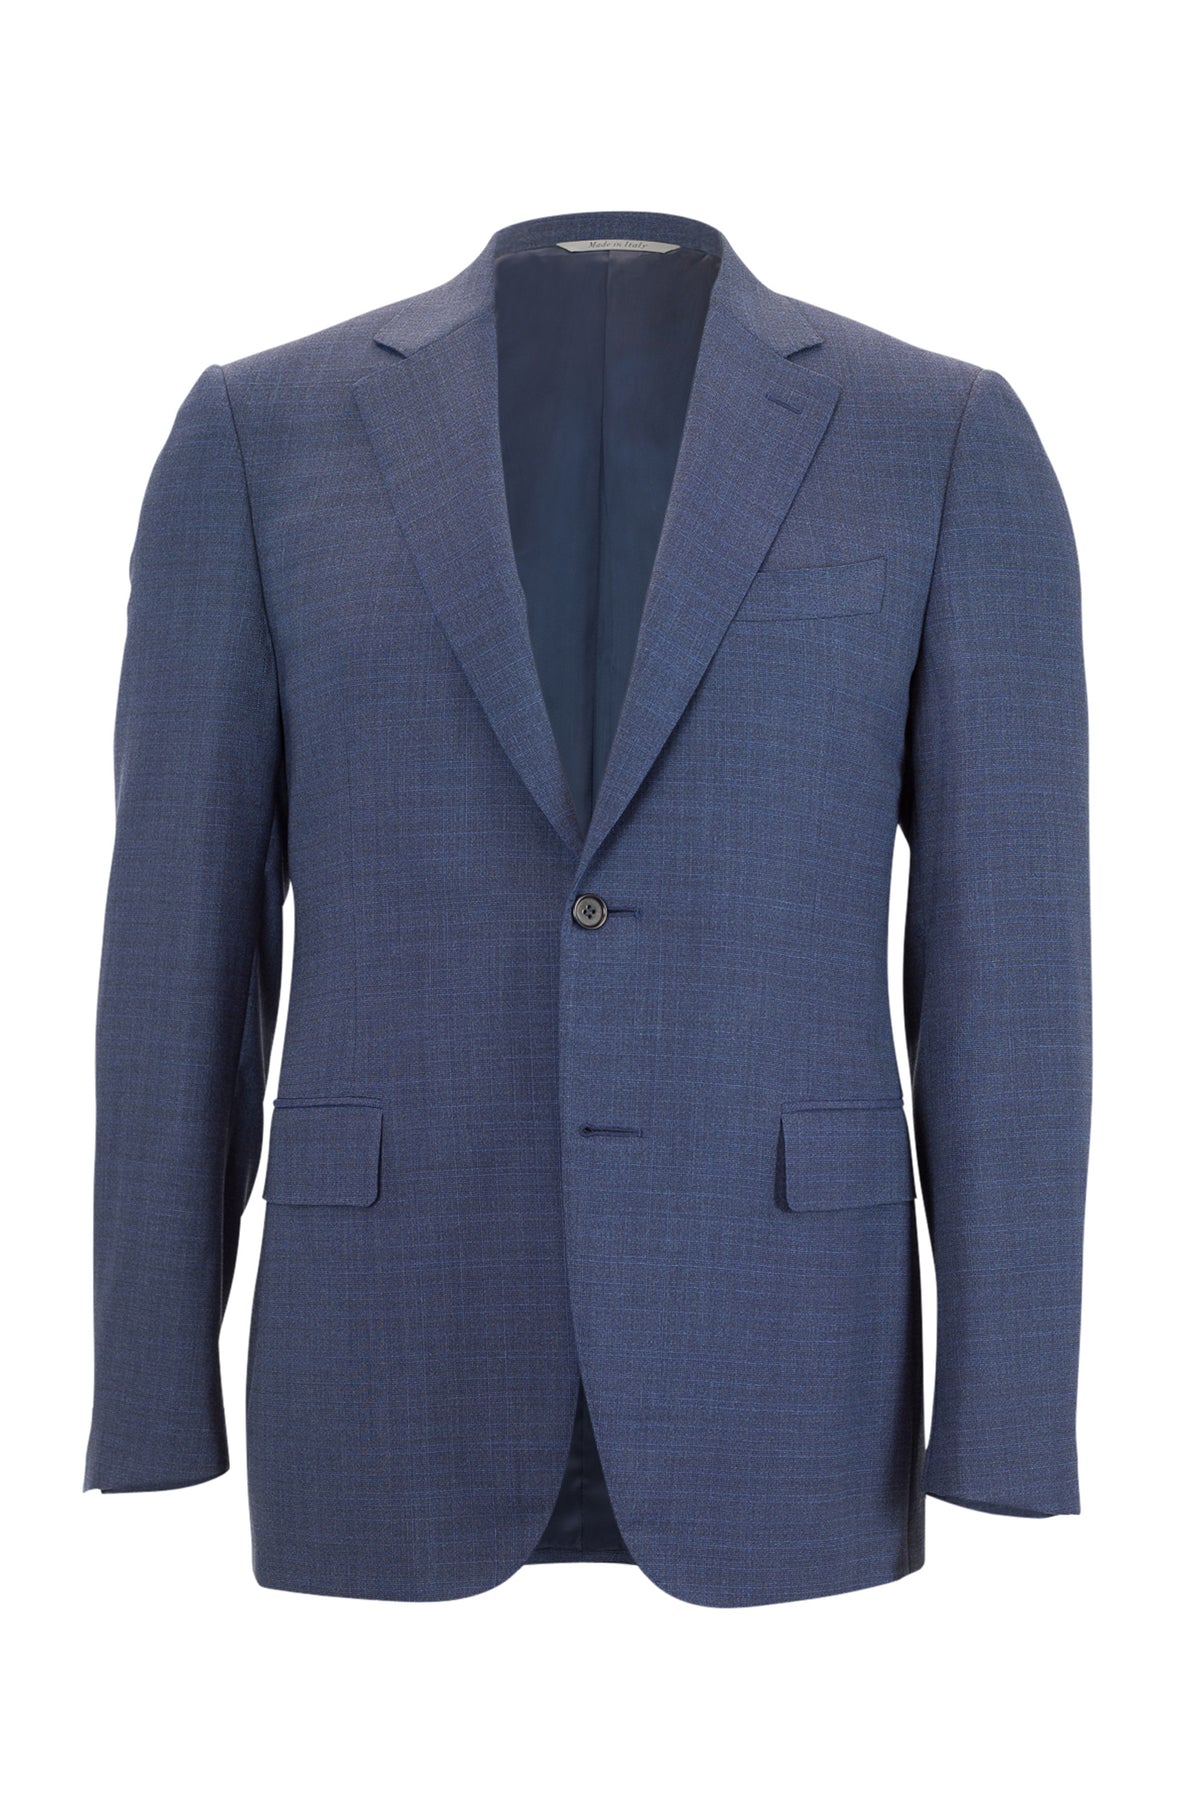 CANALI Dark Blue Impeccabile Wool Suit — Mitchell Ogilvie